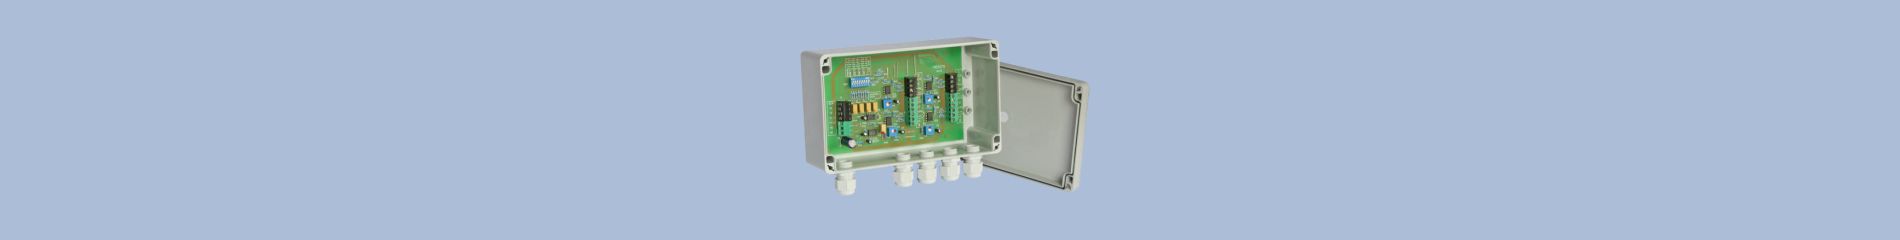 LCD20 Intelligent Load Cell Amplifier